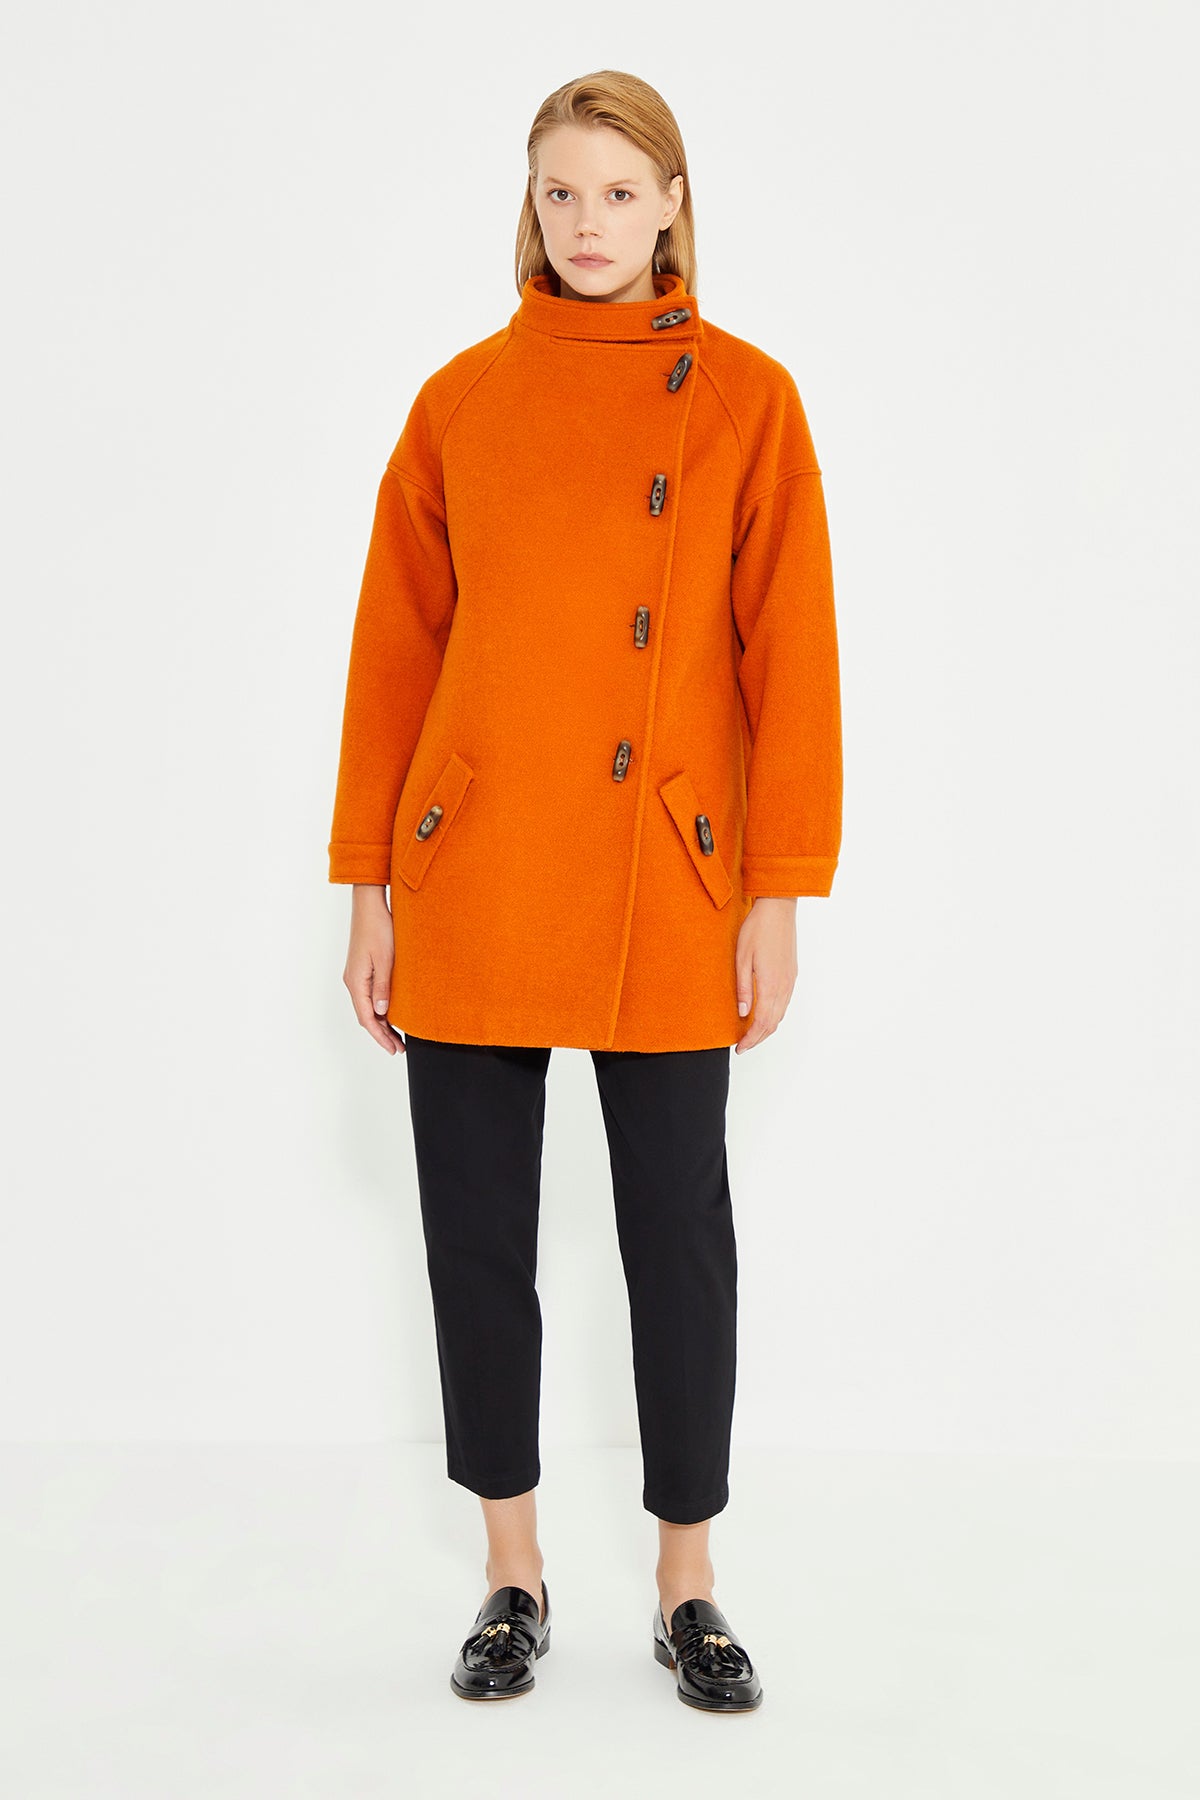 Orange Color Aysmmetric Front Button Detailed Side Pocket Women'Coat